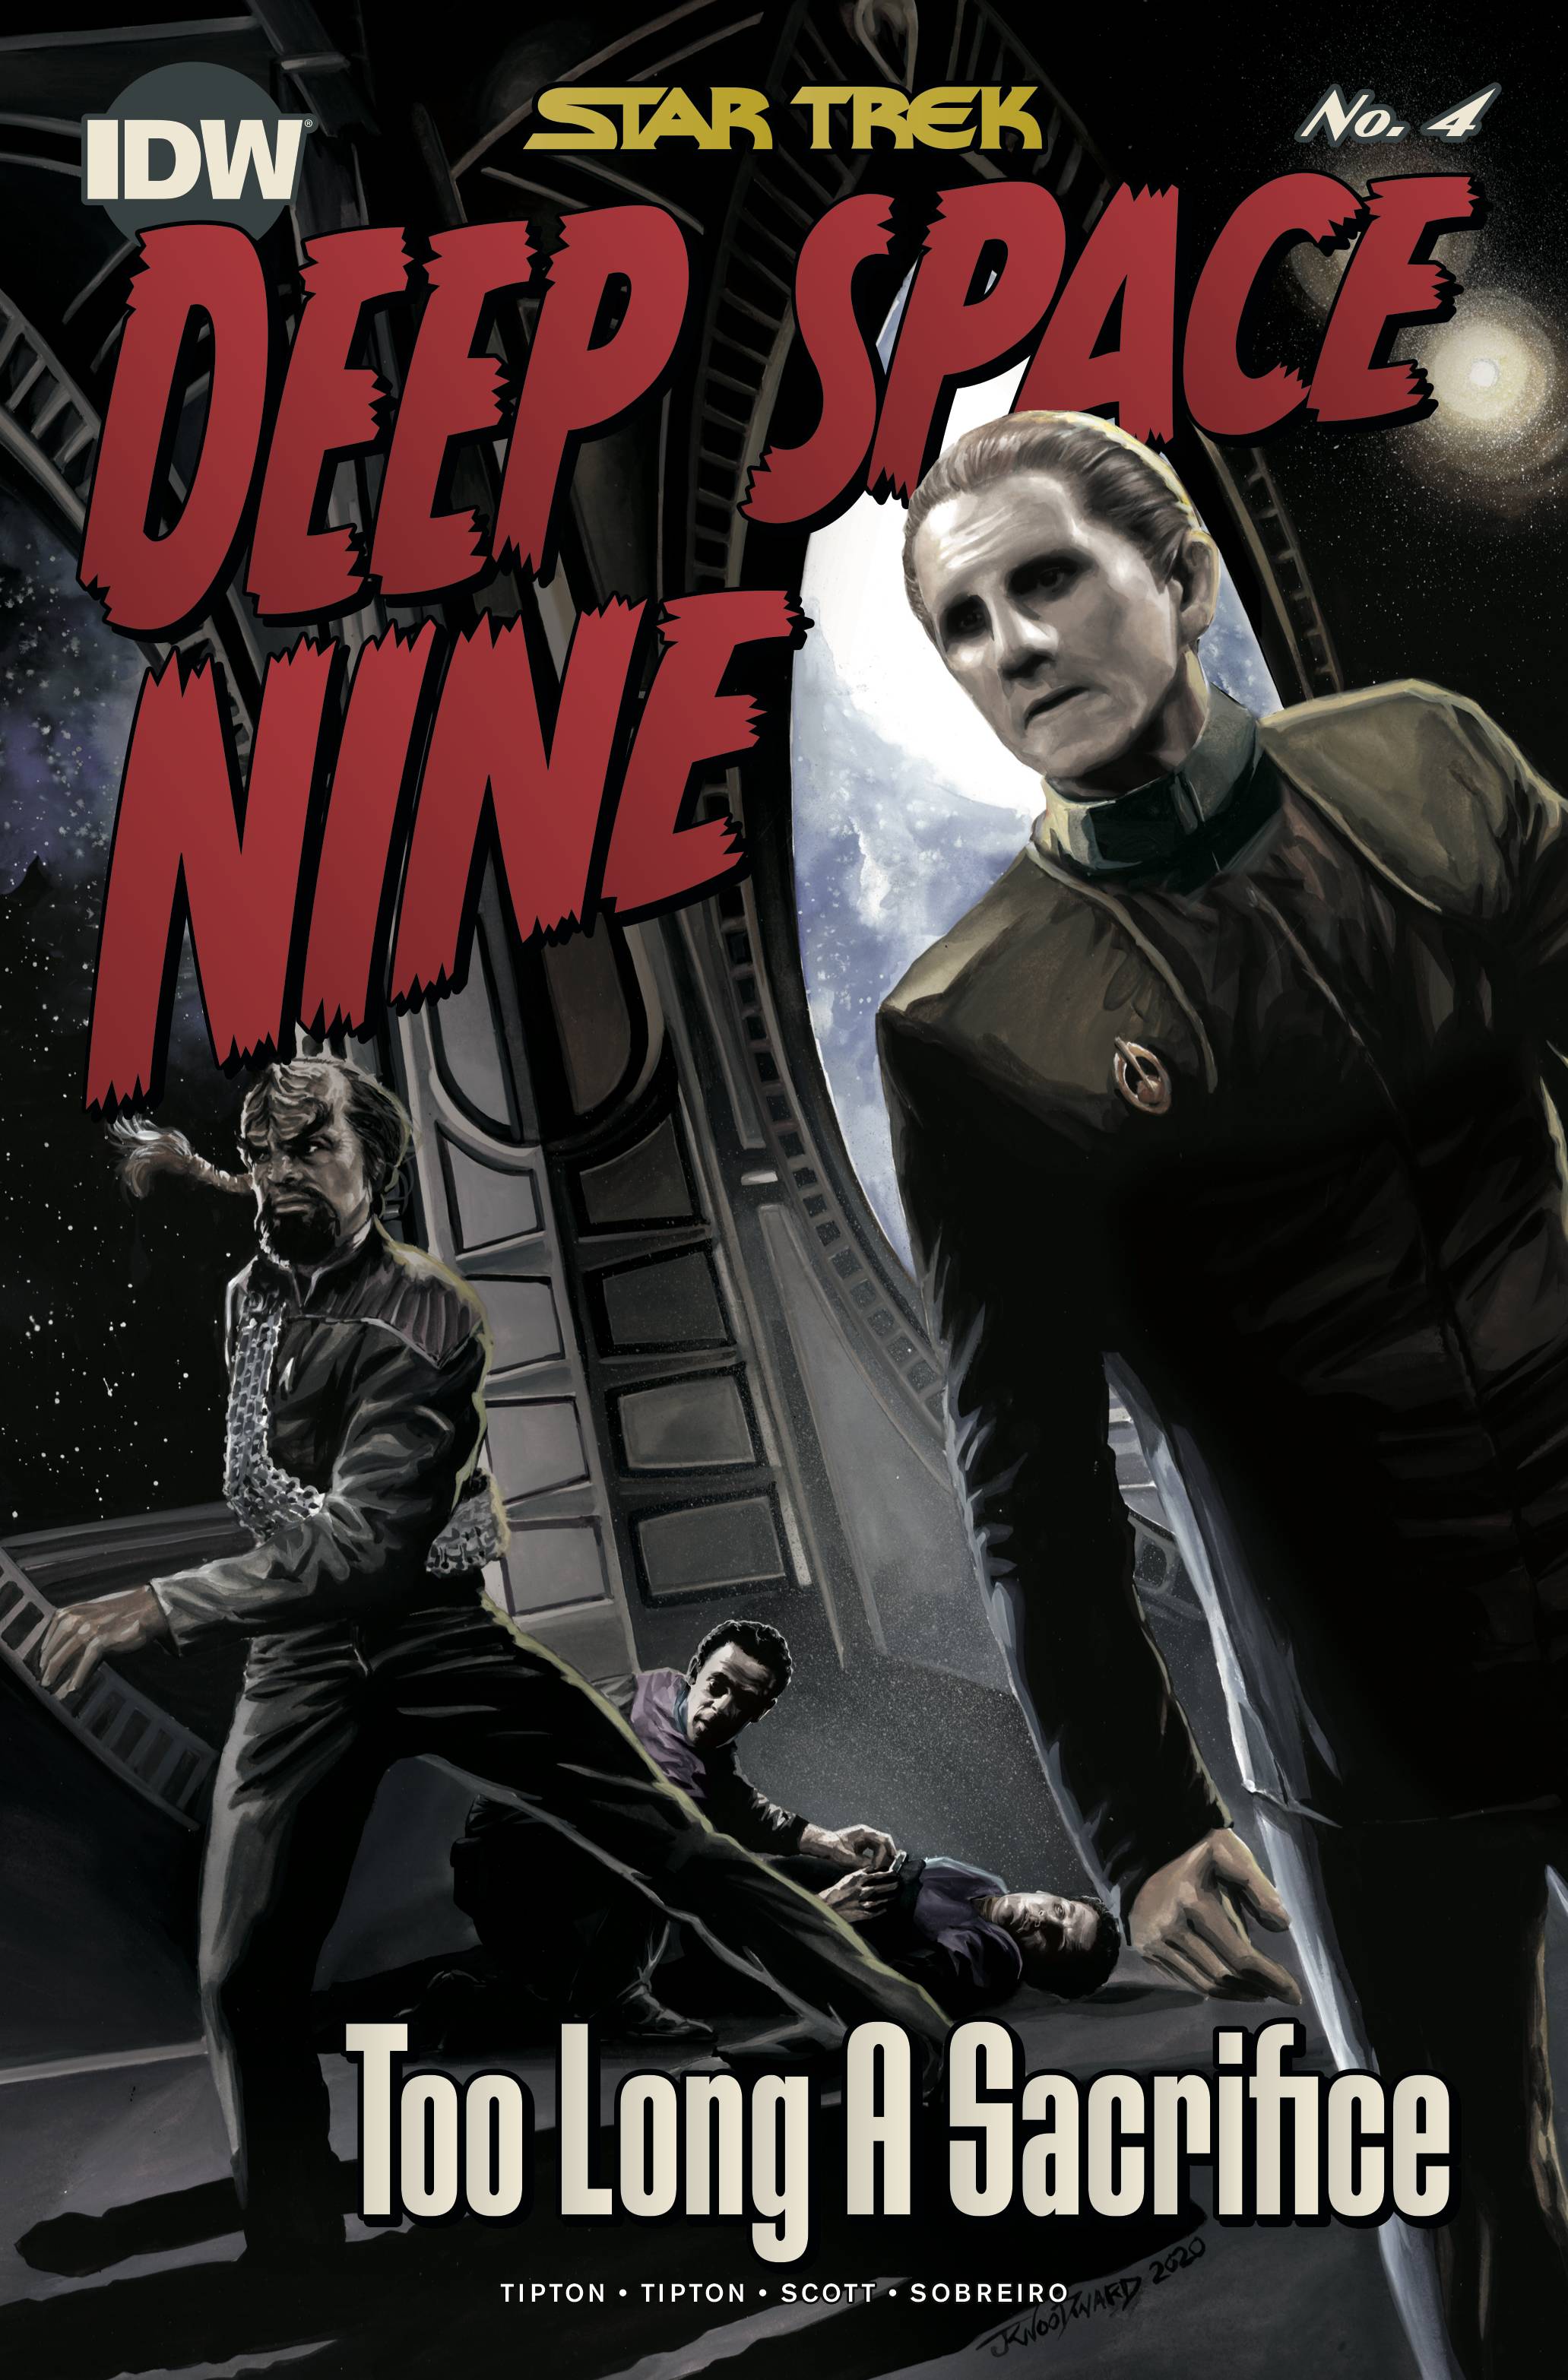 Star Trek Deep Space Nine Too Long A Sacrifice #4 1 for 10 Incentive Woodward